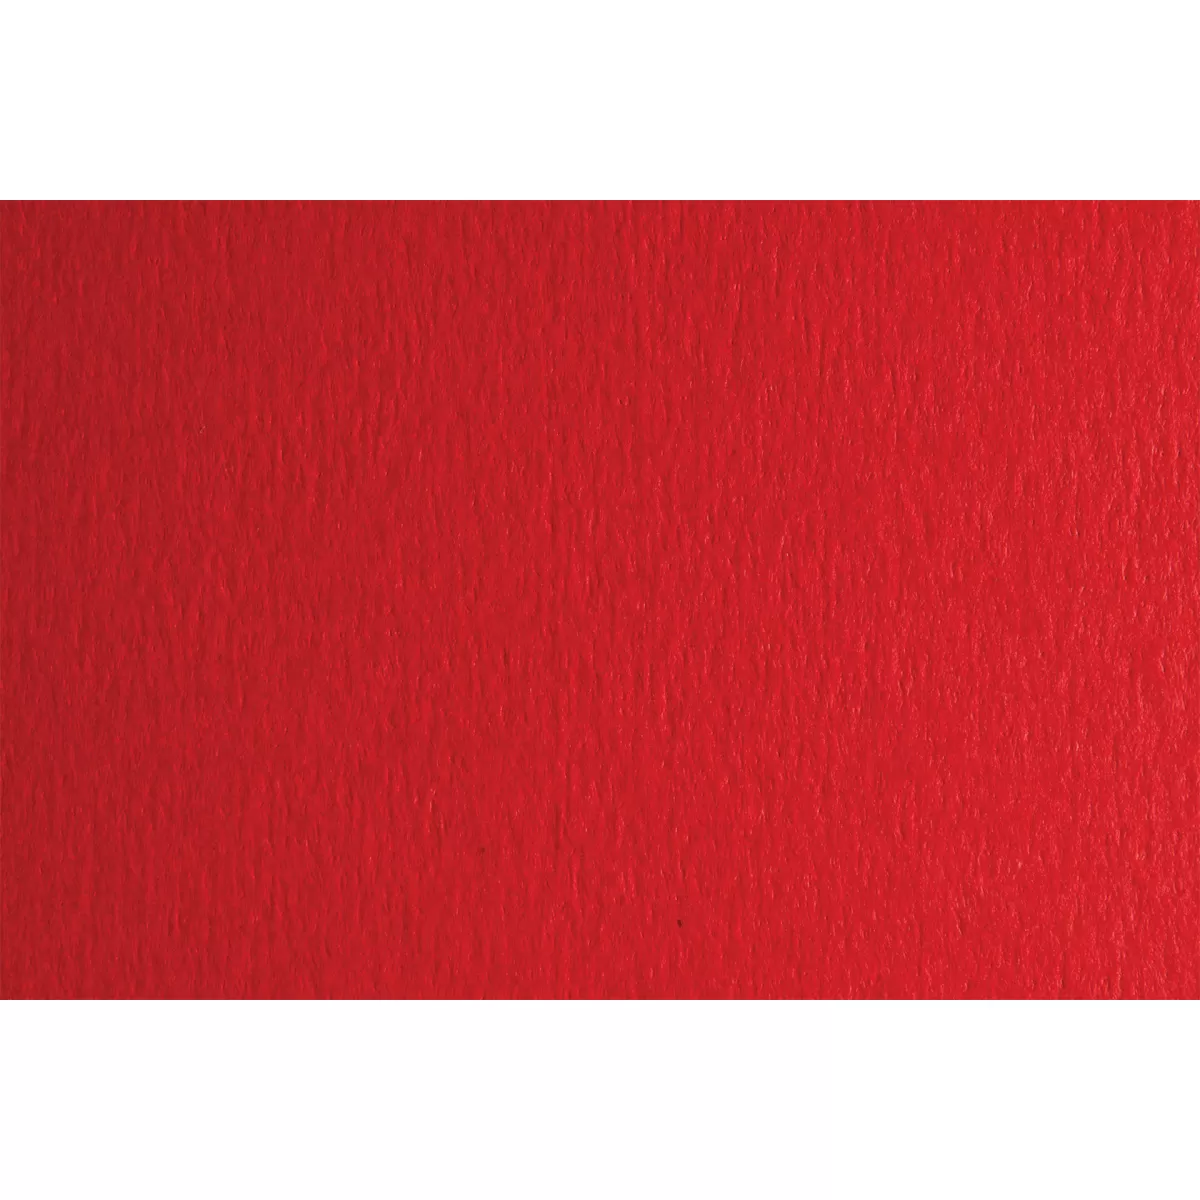 Fabriano Картон Colore, 70 x 100 cm, 140 g/m2, № 229, червен